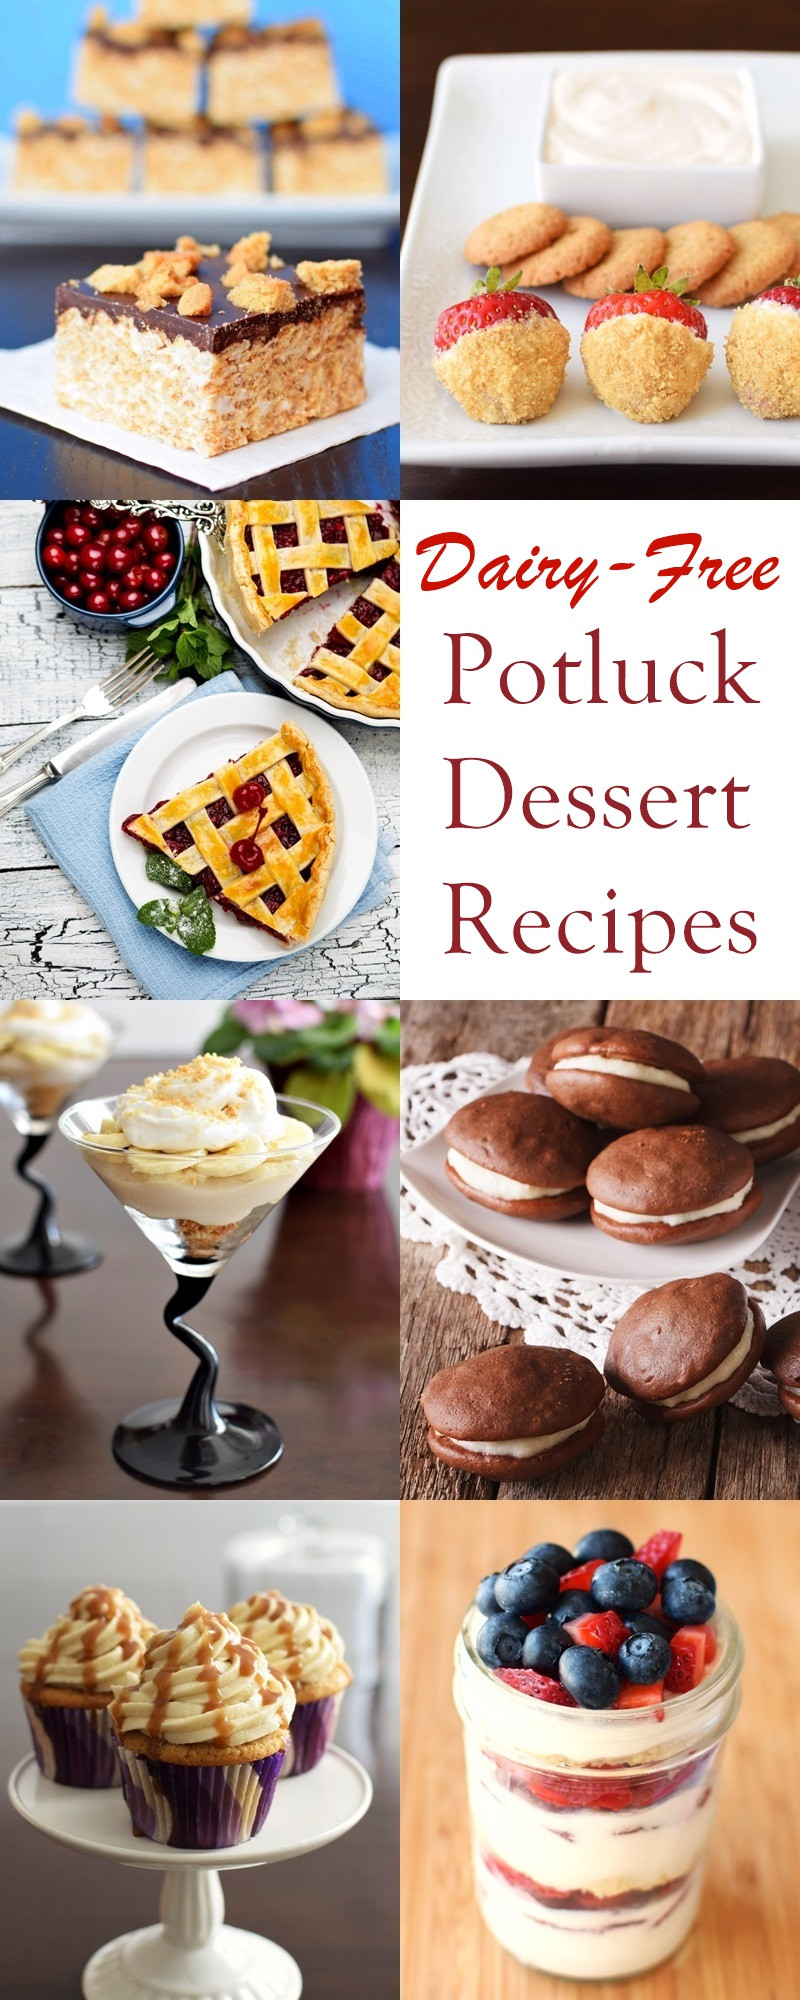 Gluten And Dairy Free Dessert Recipes
 22 Dairy Free Potluck Dessert Recipes Everyone Will Love